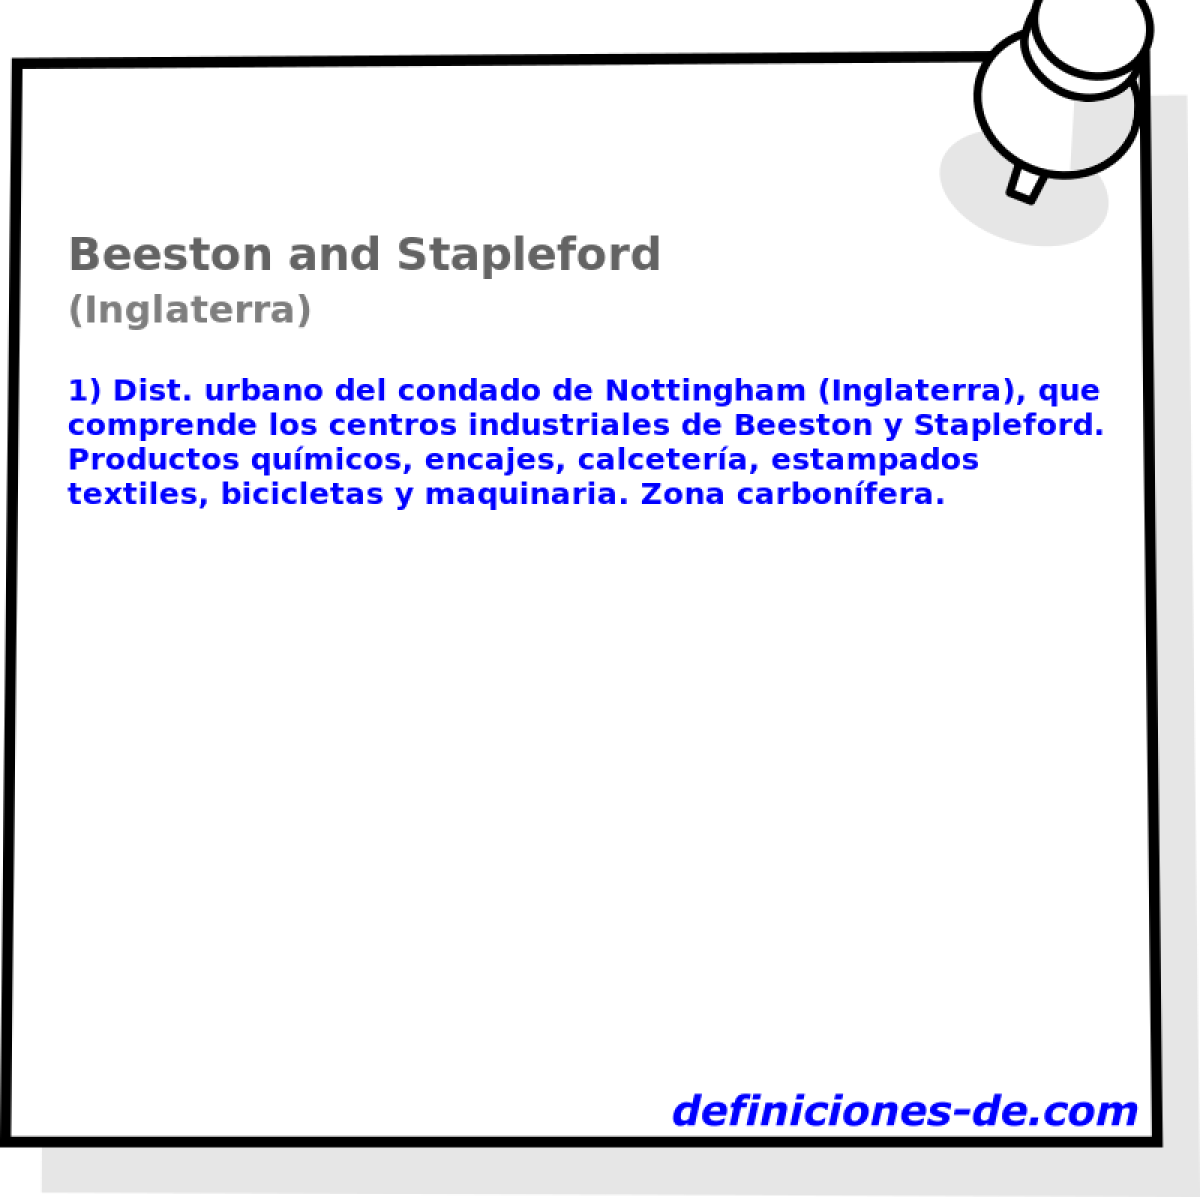 Beeston and Stapleford (Inglaterra)